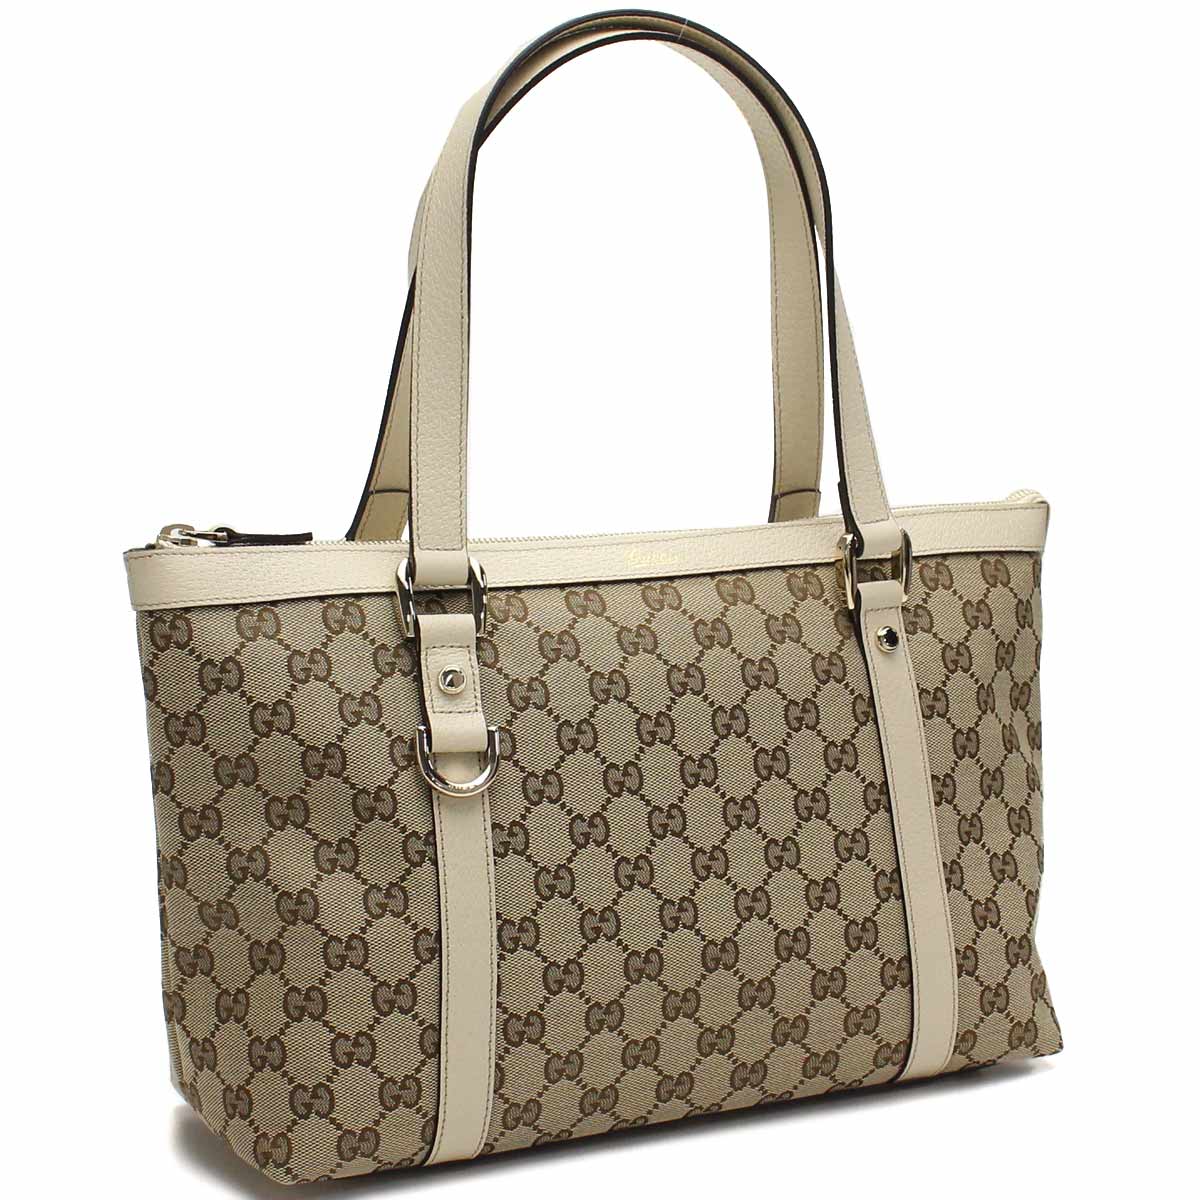 Bighit The total brand wholesale | Rakuten Global Market: Gucci (GUCCI) tote bag 141470 ...